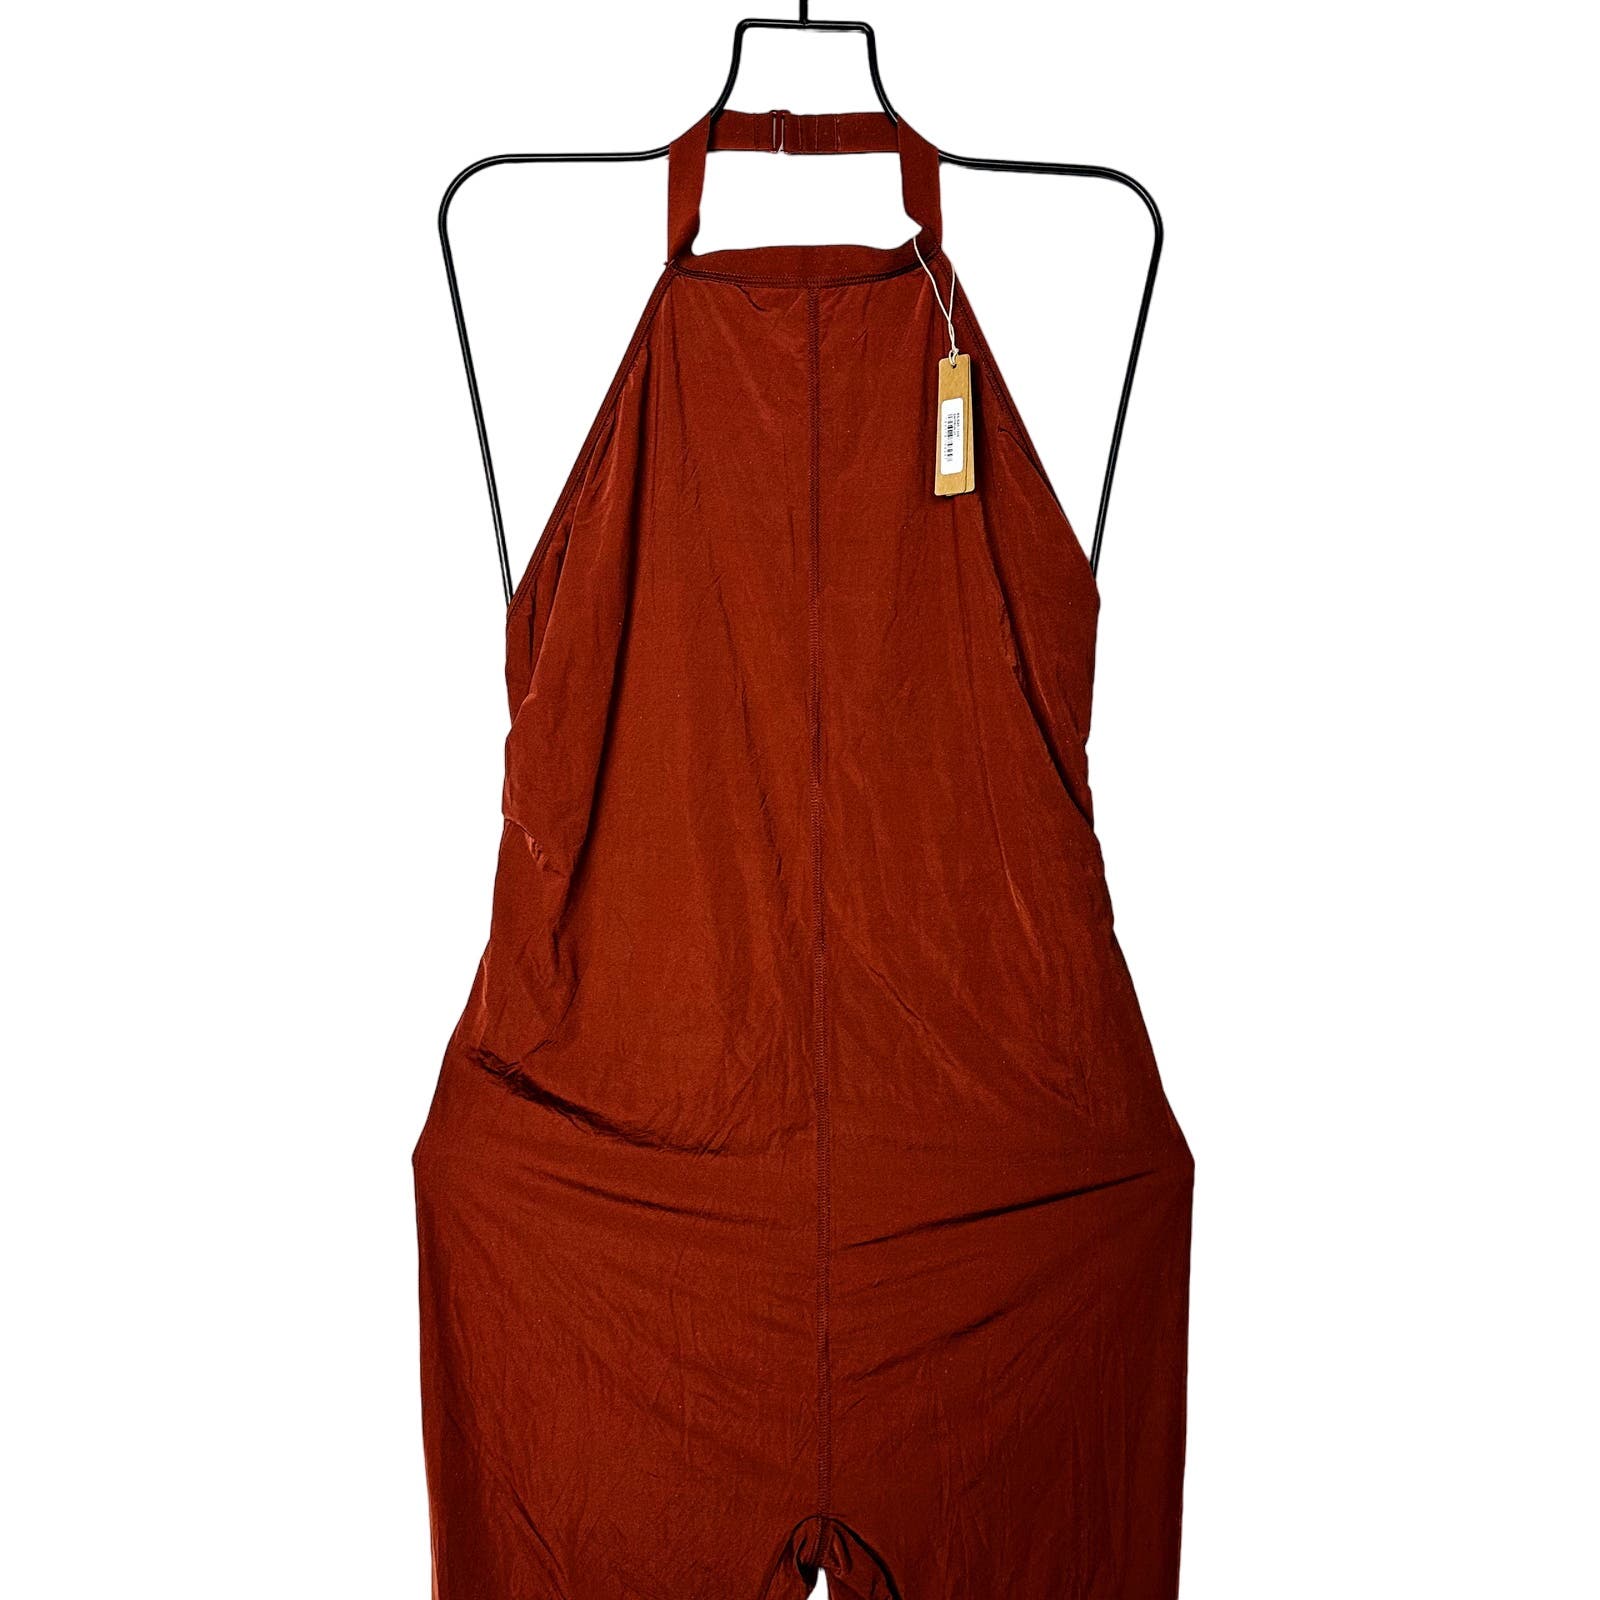 SKIMS NWT Saffron Jelly Sheer Full Bodysuit Halter Size XS